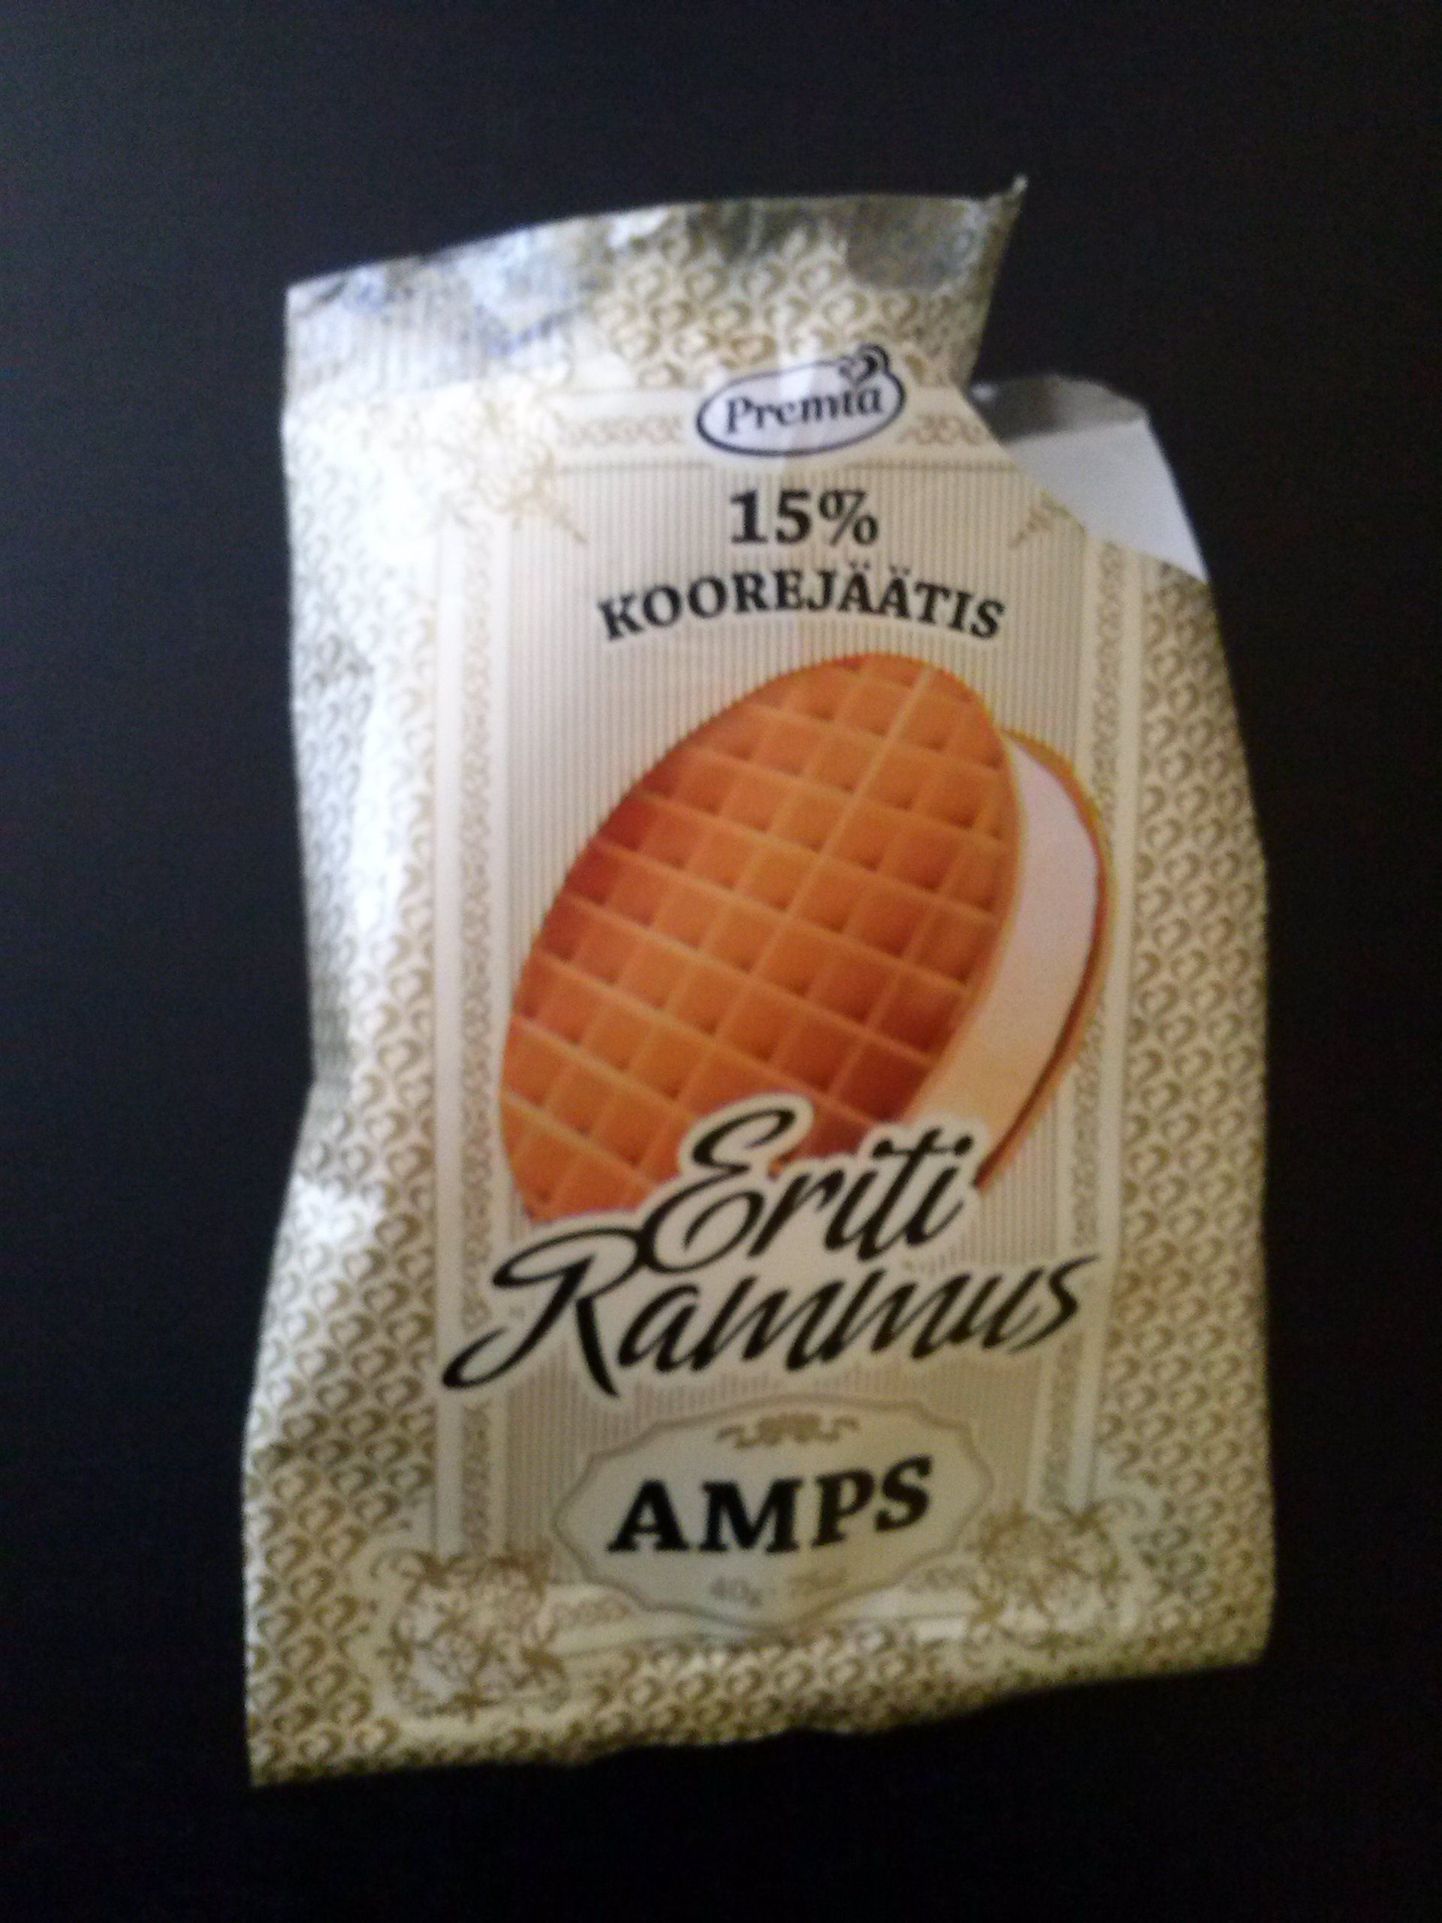 Premia Eriti Rammus Amps.